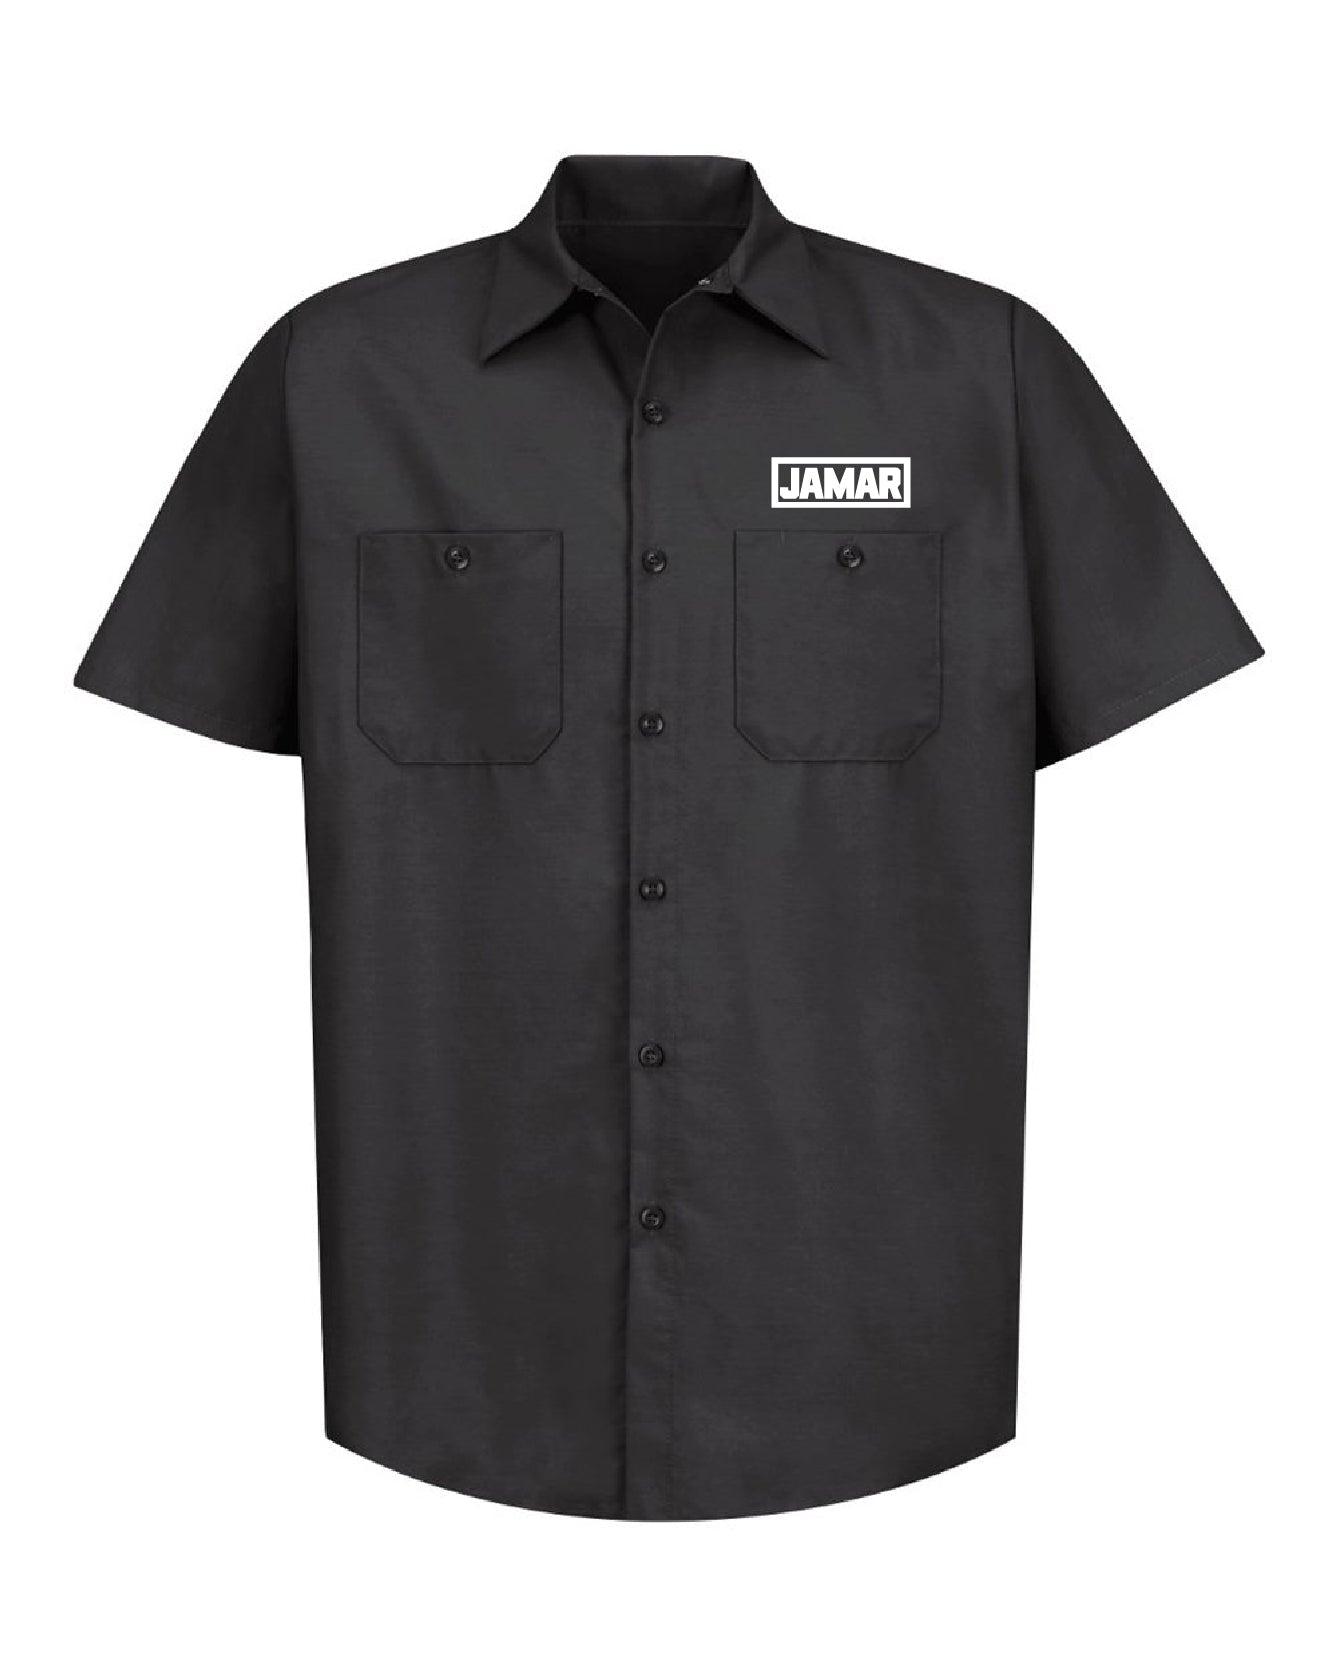 Jamar Service Industrial Short Sleeve Work Shirt - DSP On Demand